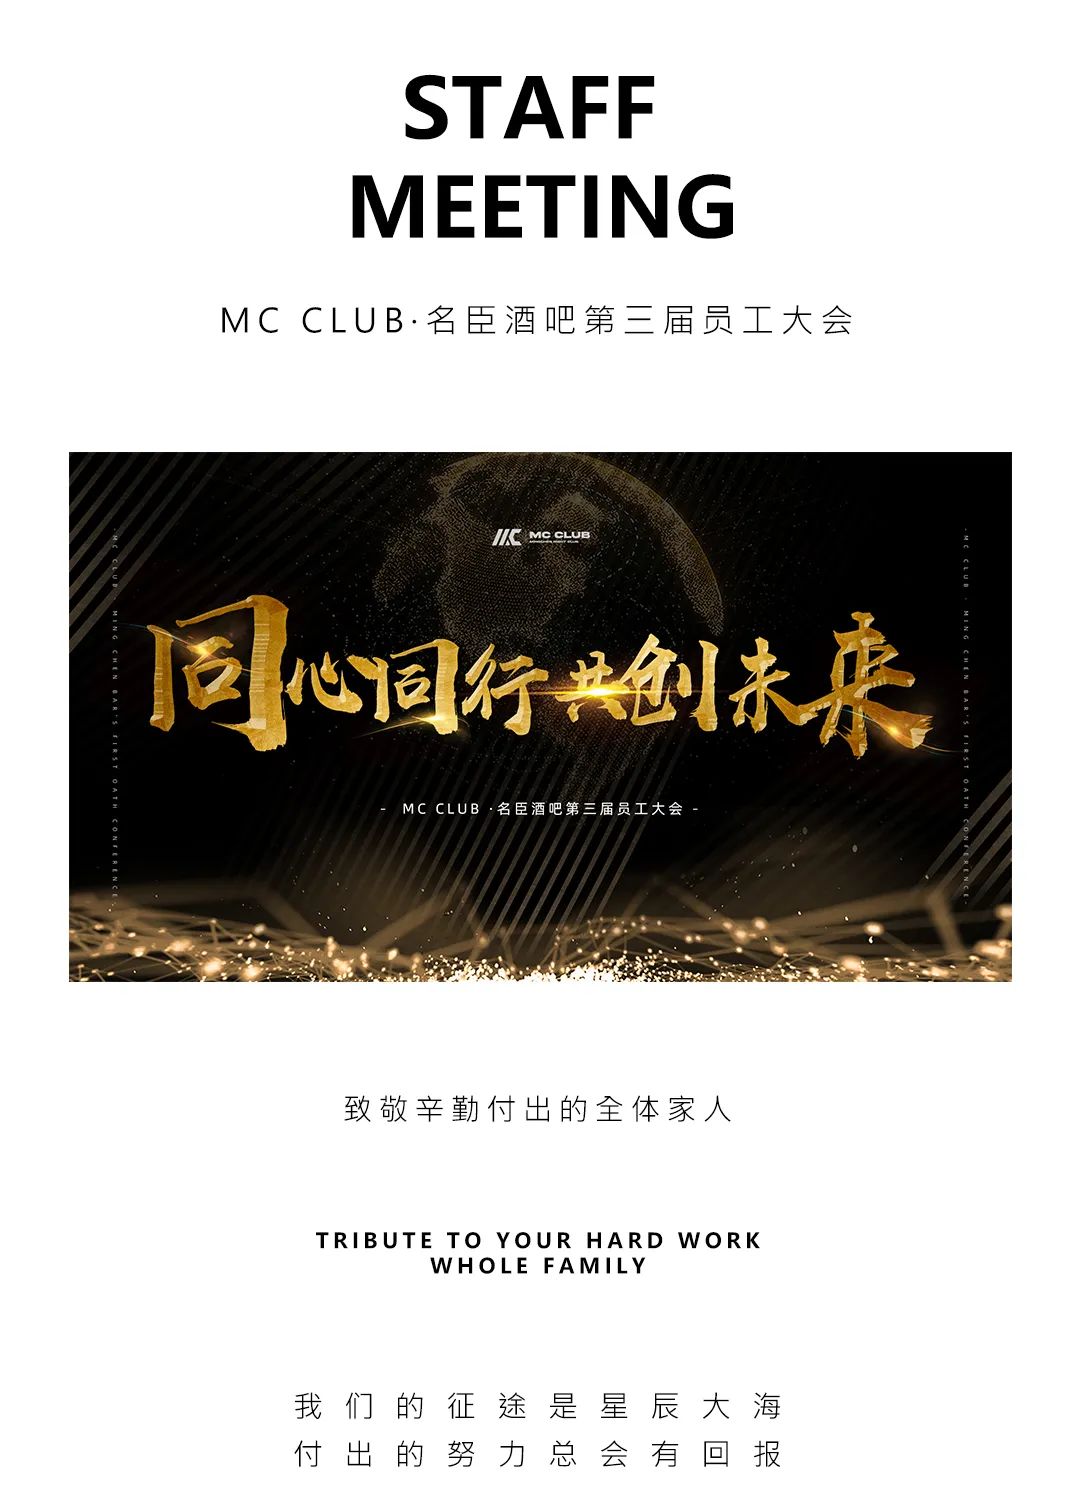 MC CLUB | 同心同行 共创未来 第三届员工大会圆满落幕-古镇MC CLUB/名臣酒吧